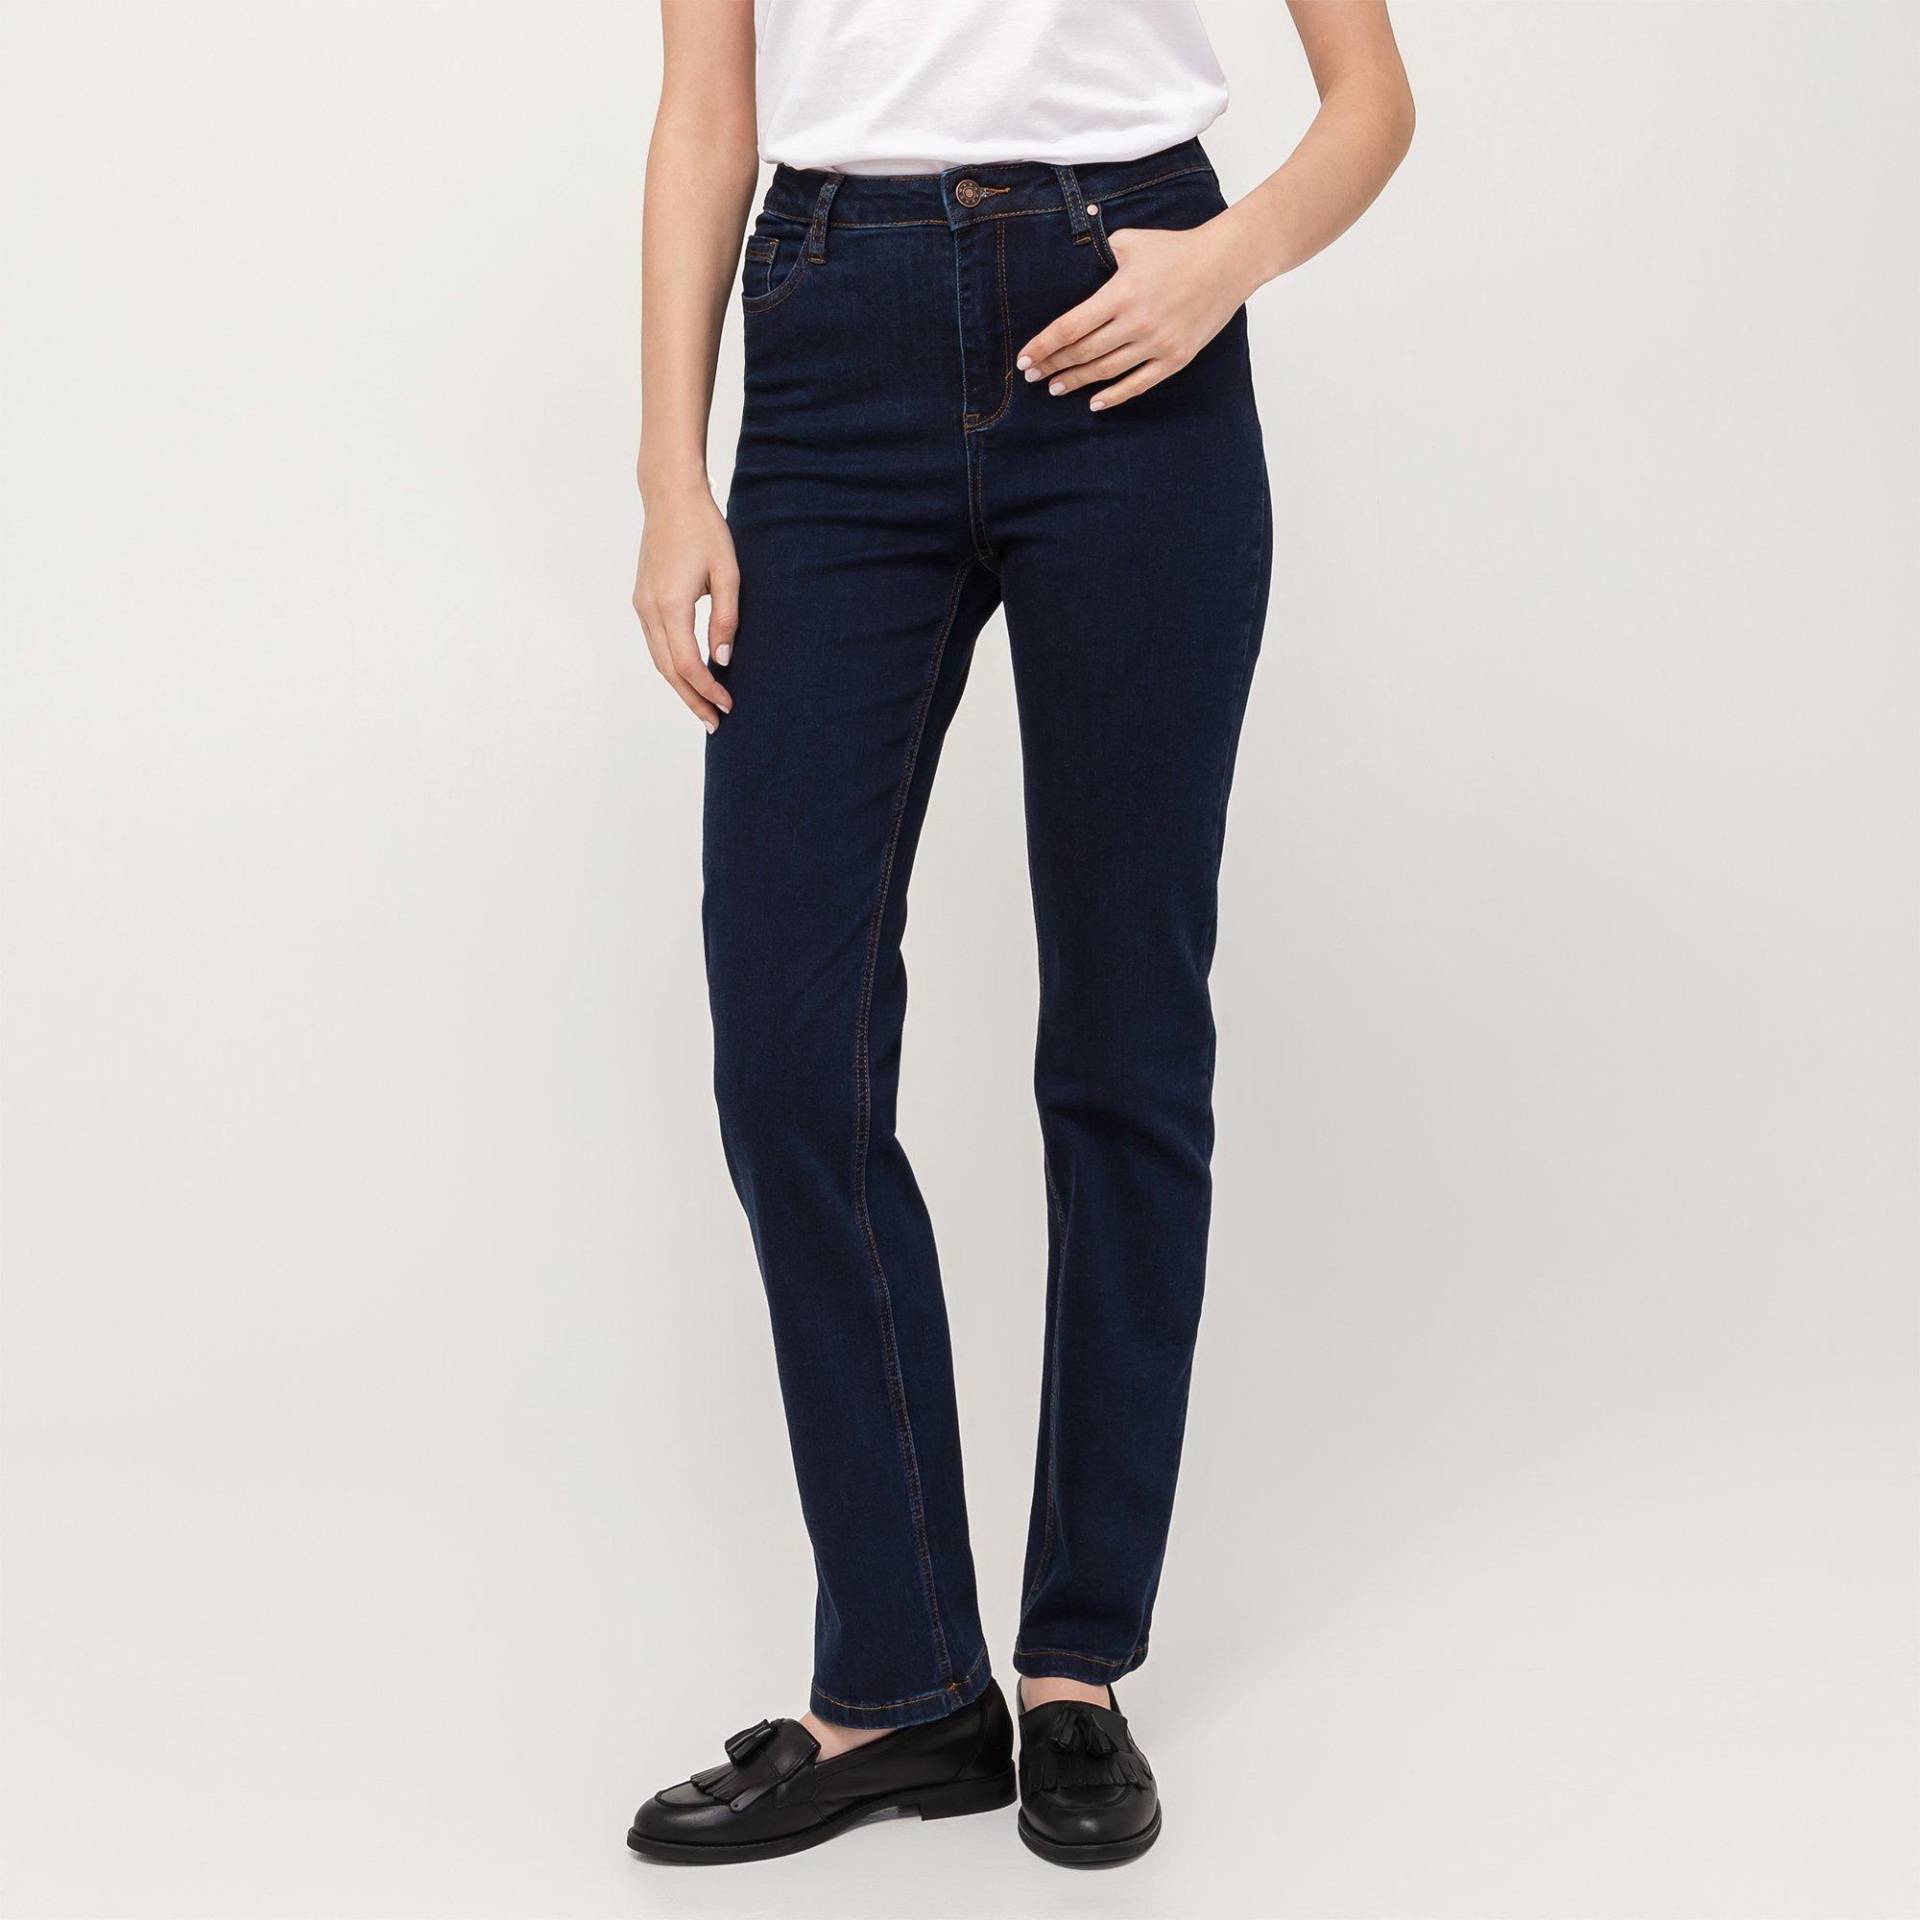 Jeans, Straight Leg Fit Damen Blau Denim Dunkel L30/W38 von Manor Woman